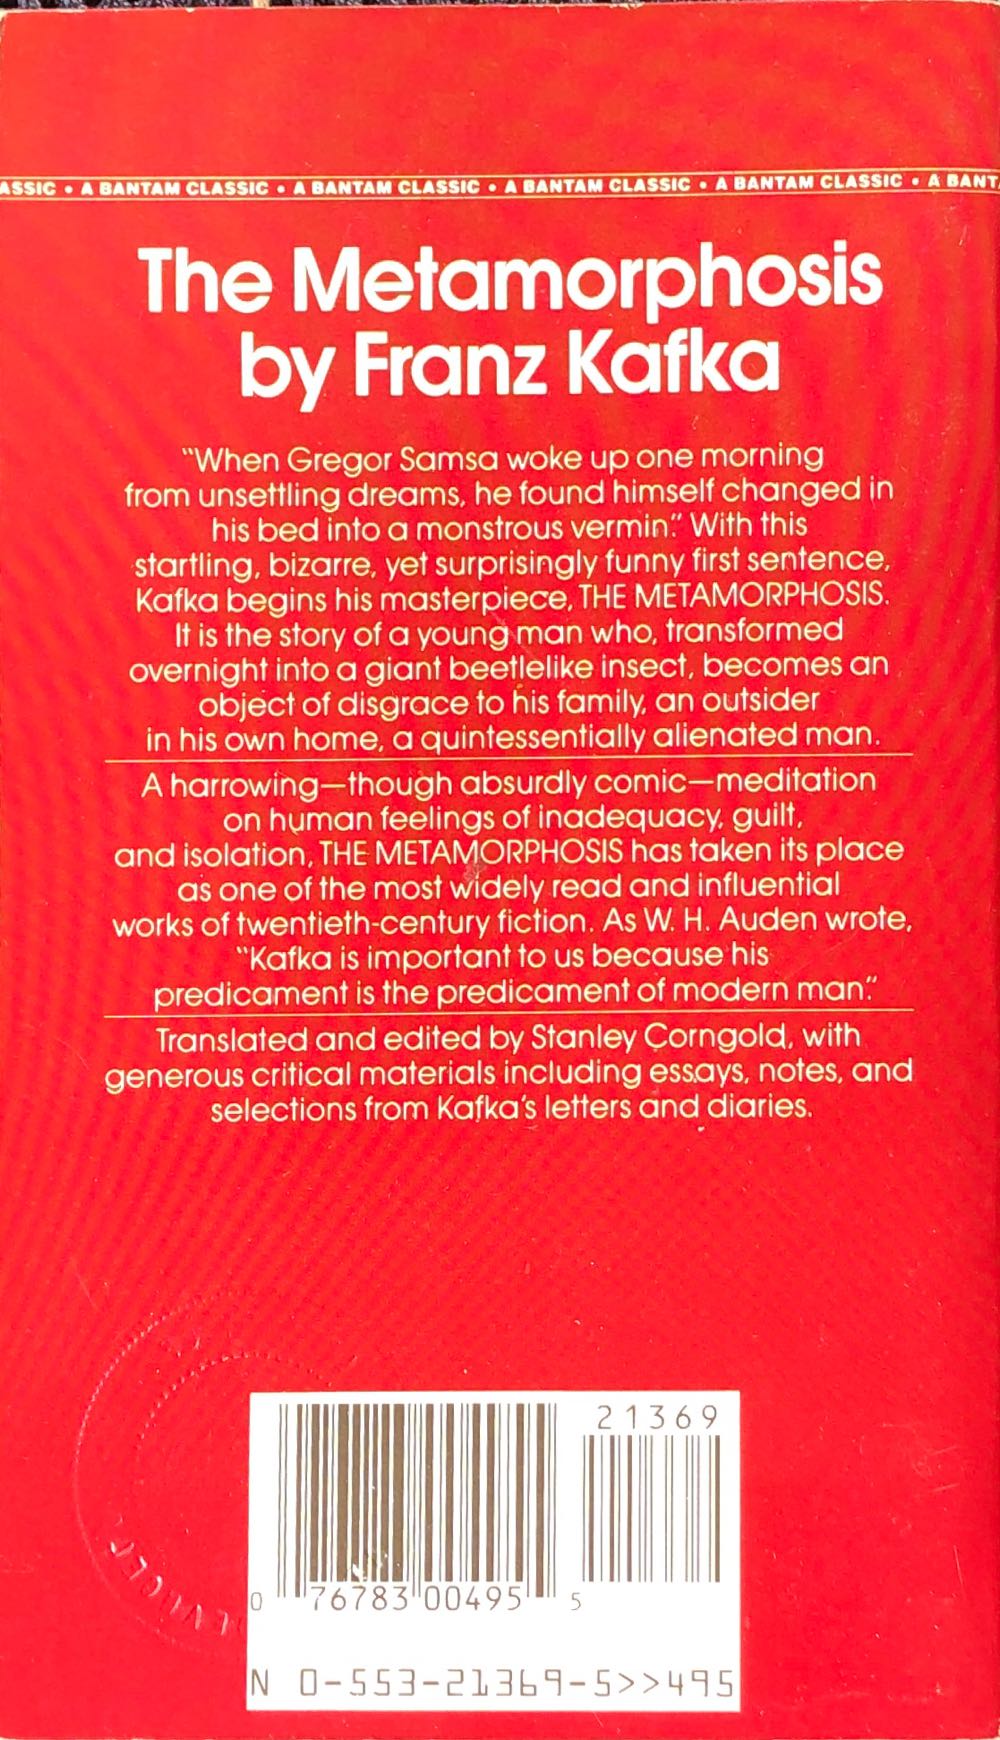 The Metamorphosis - Franz Kafka (Bantam Books - Paperback) book collectible [Barcode 9780553213690] - Main Image 4